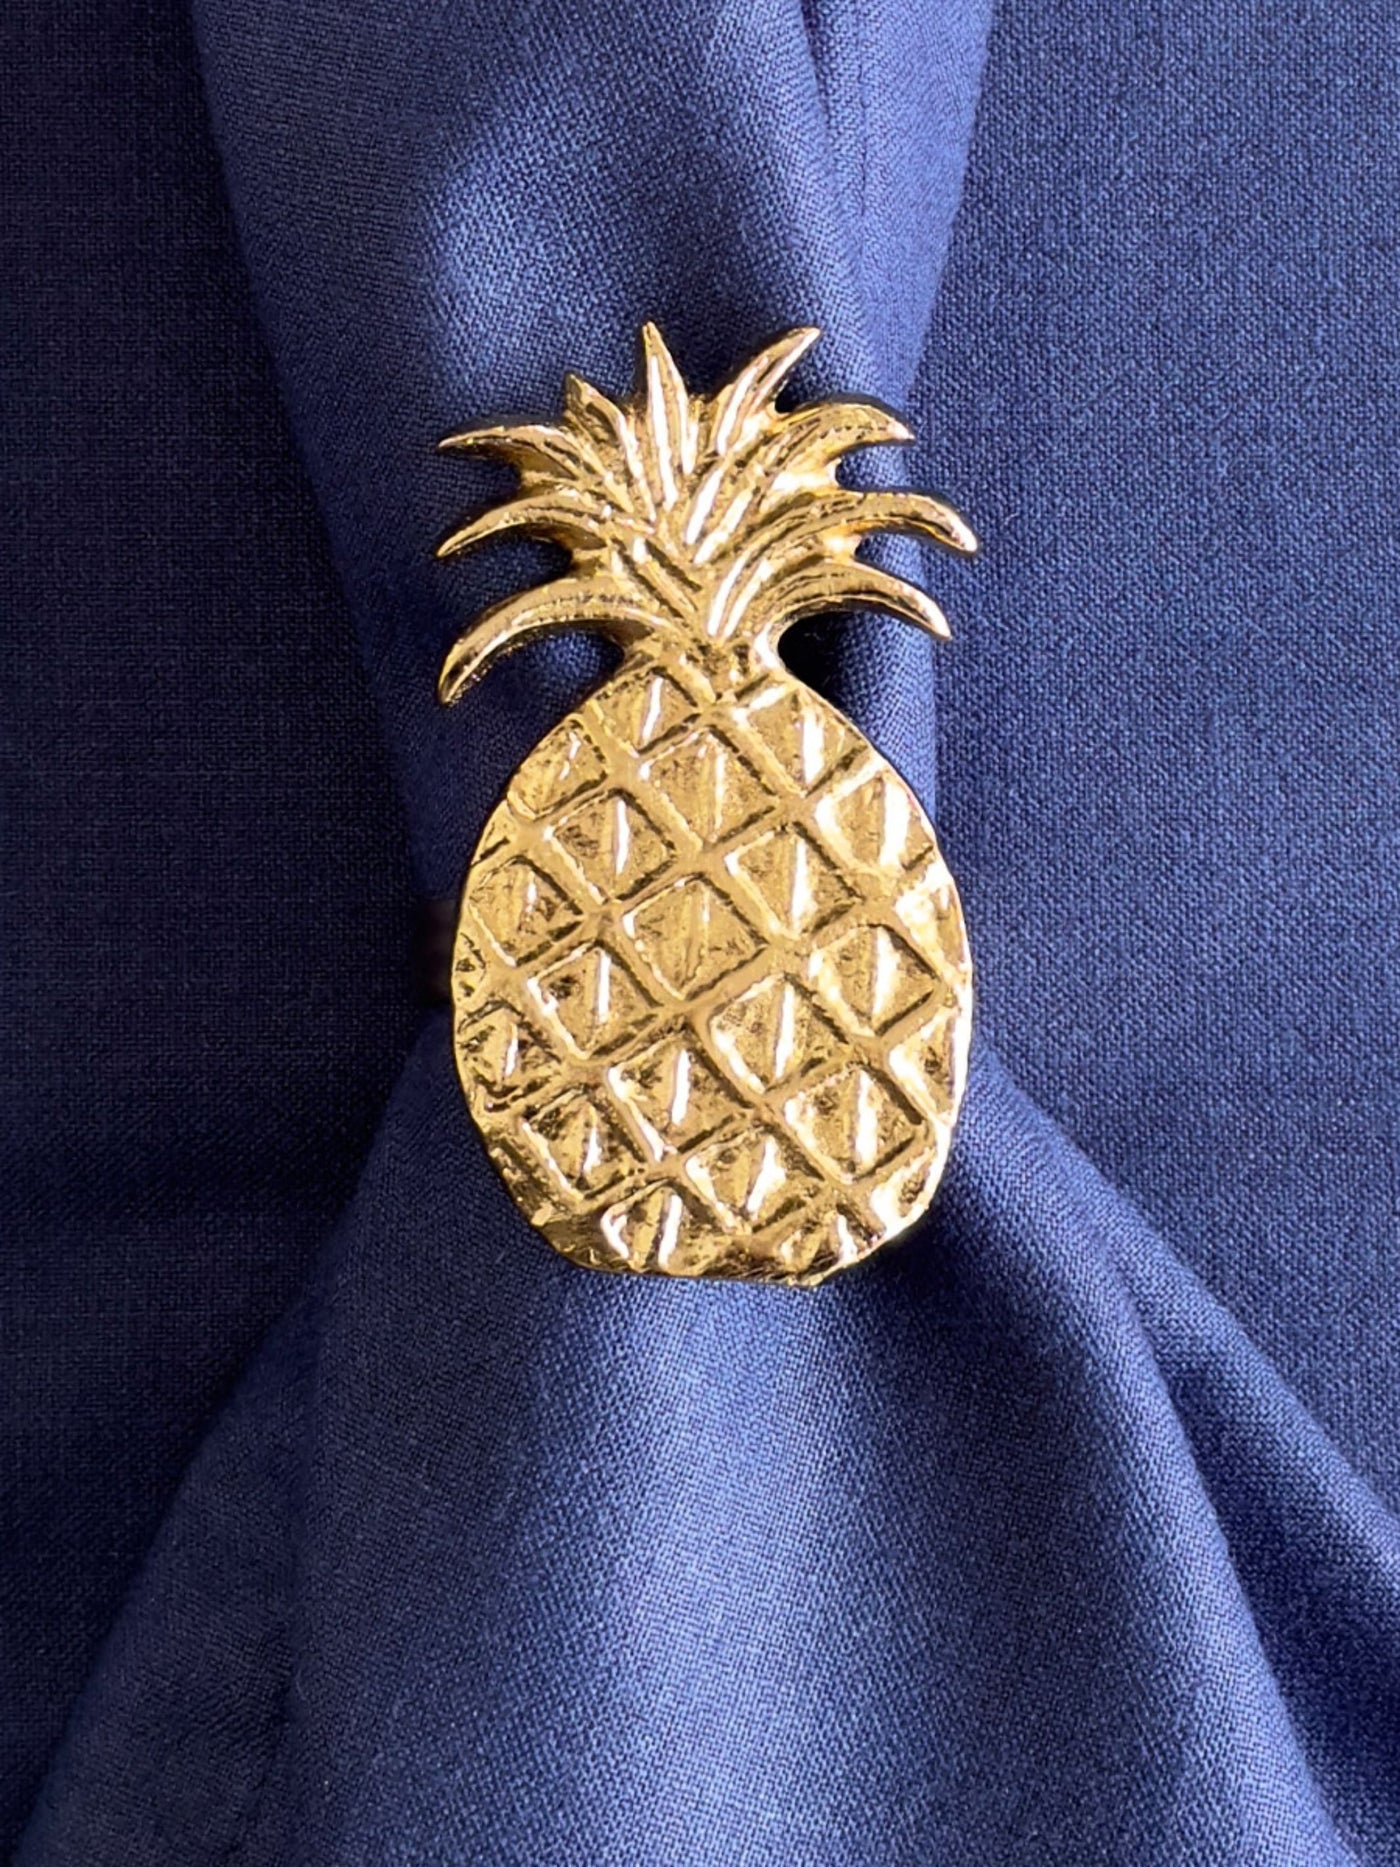 Napkin Ring Pineapple Set of 4